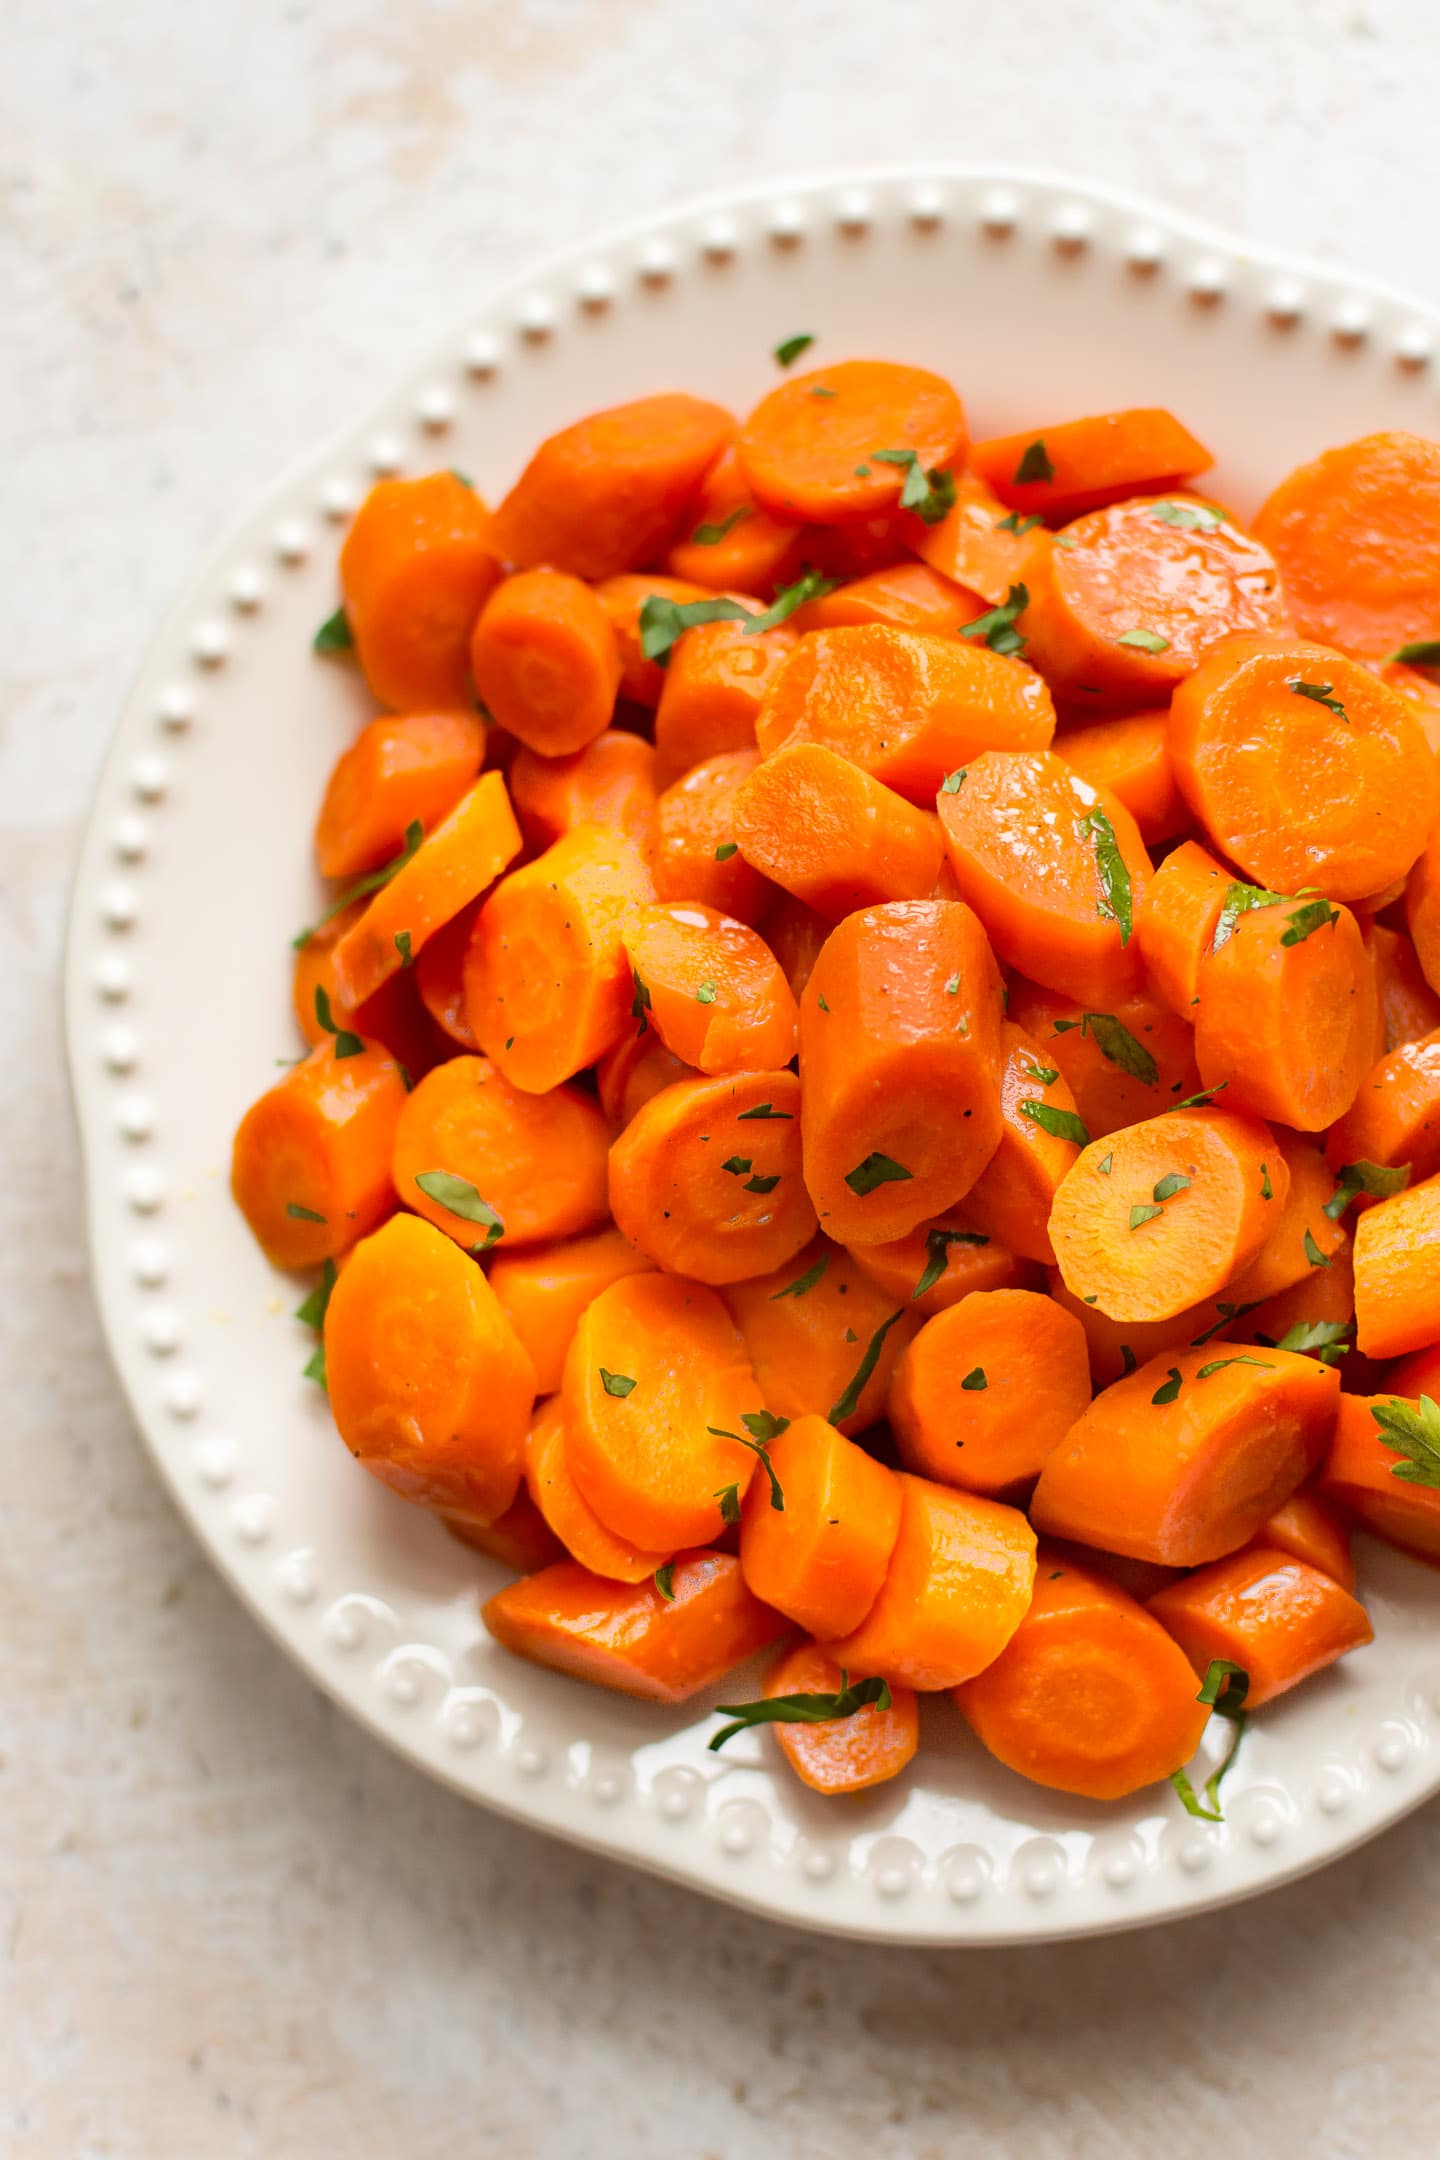 https://www.saltandlavender.com/wp-content/uploads/2019/01/crockpot-honey-glazed-carrots-recipe-1.jpg